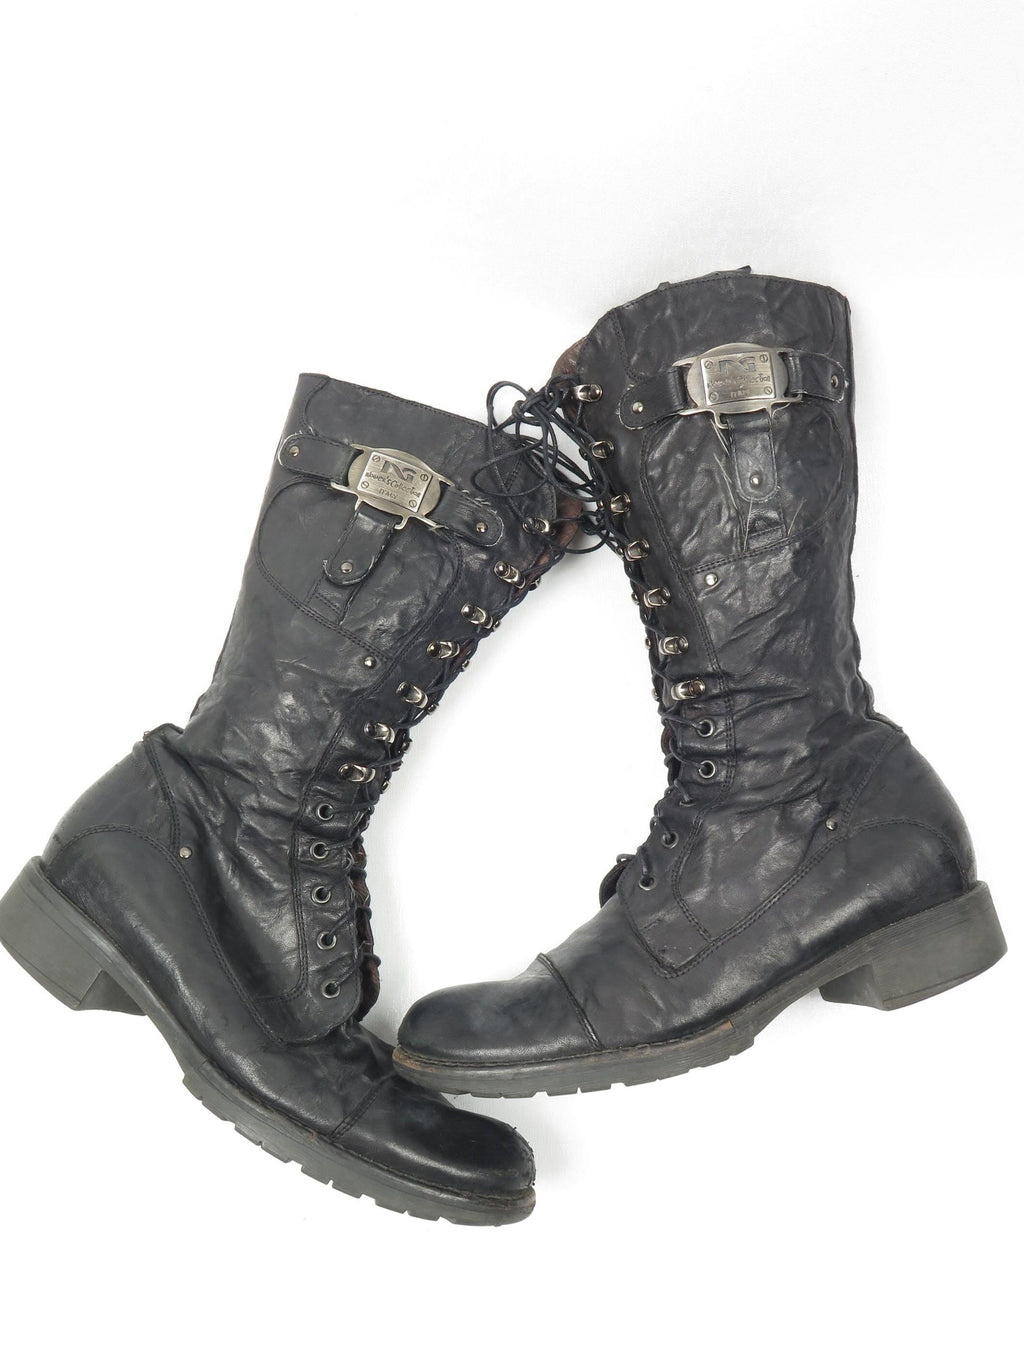 Women's Vintage Black Leather Lace Up Boots 38/5